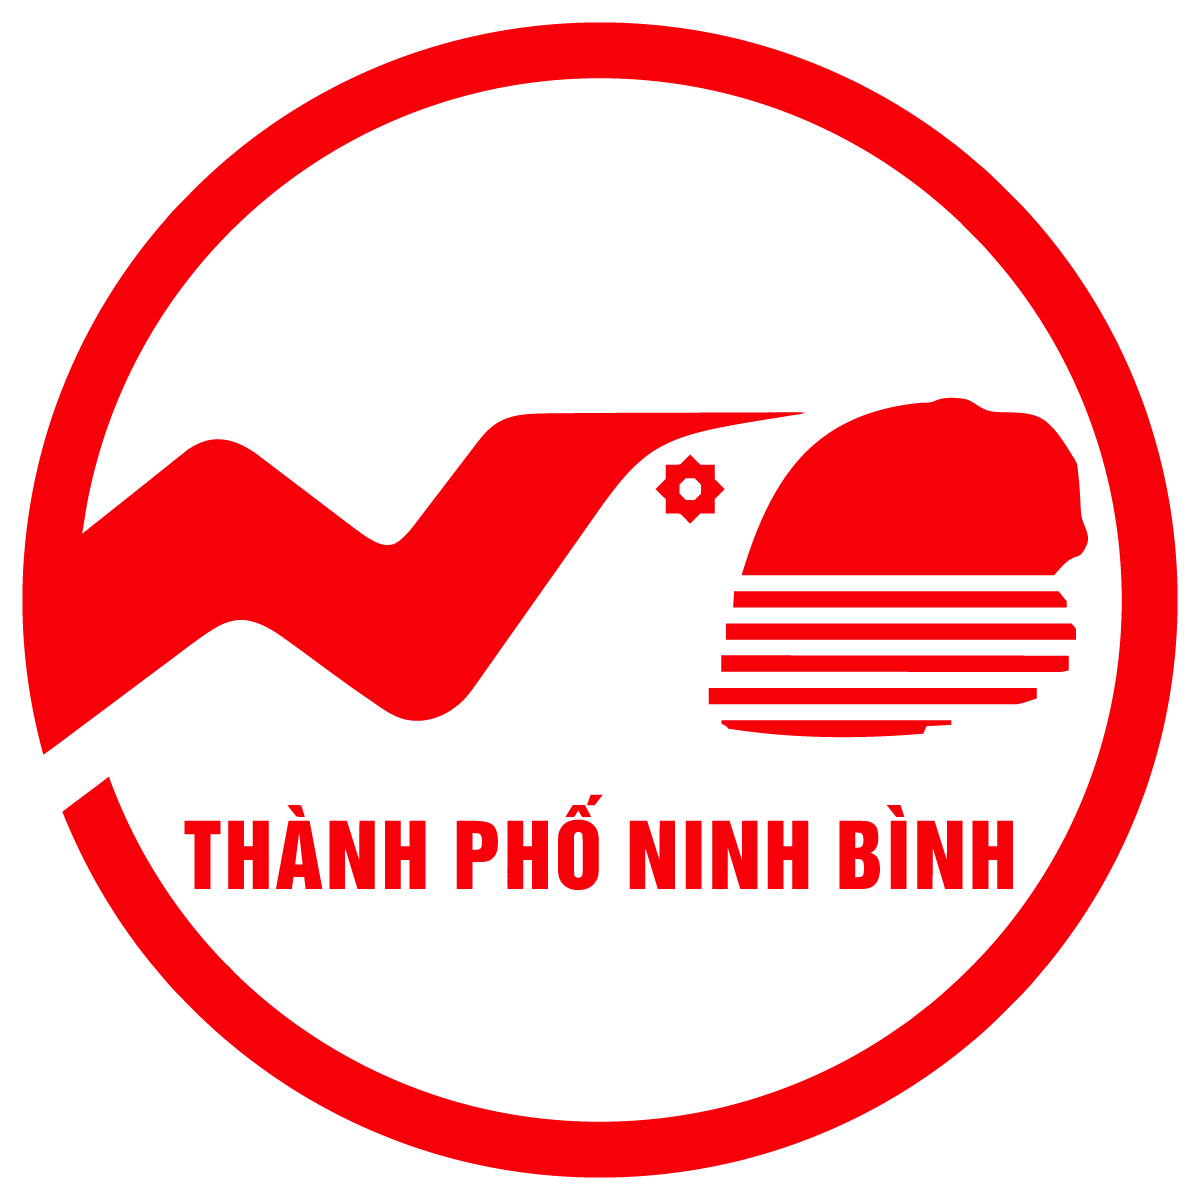 Logo Thanh Pho Ninh Binh